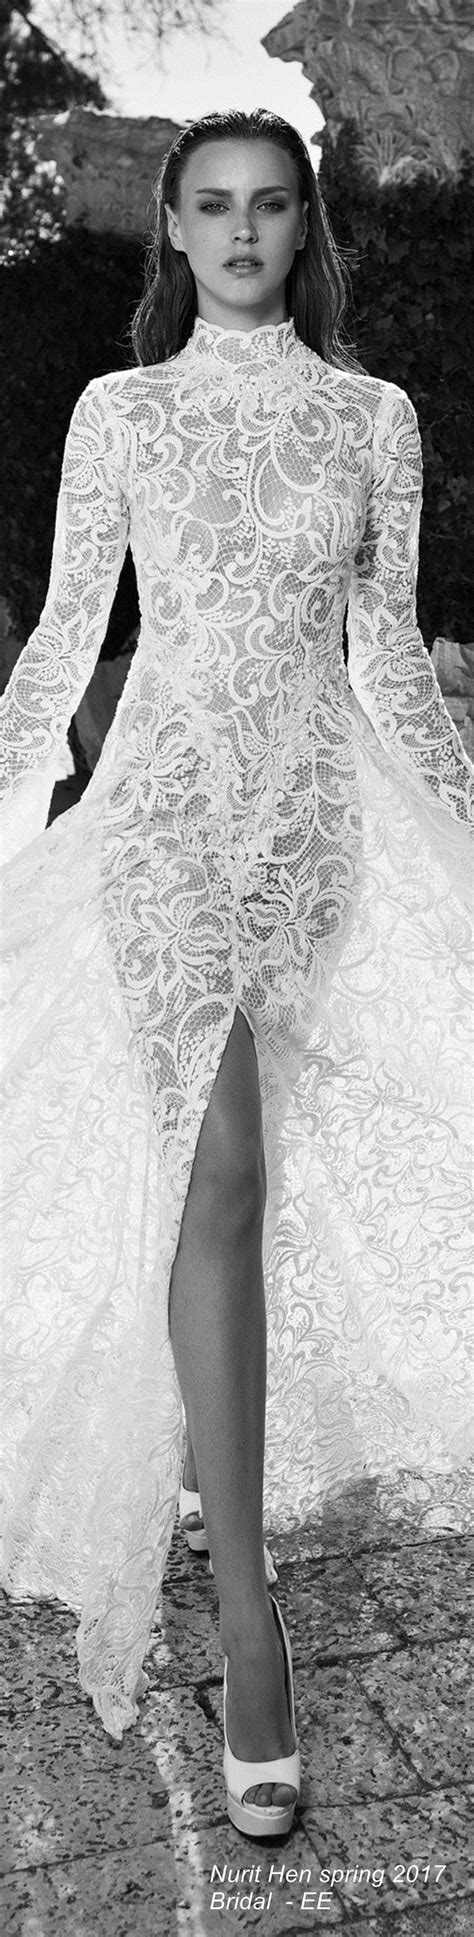 nurit hen spring 2017 bridal ee beautiful wedding gowns designer wedding gowns wedding dress